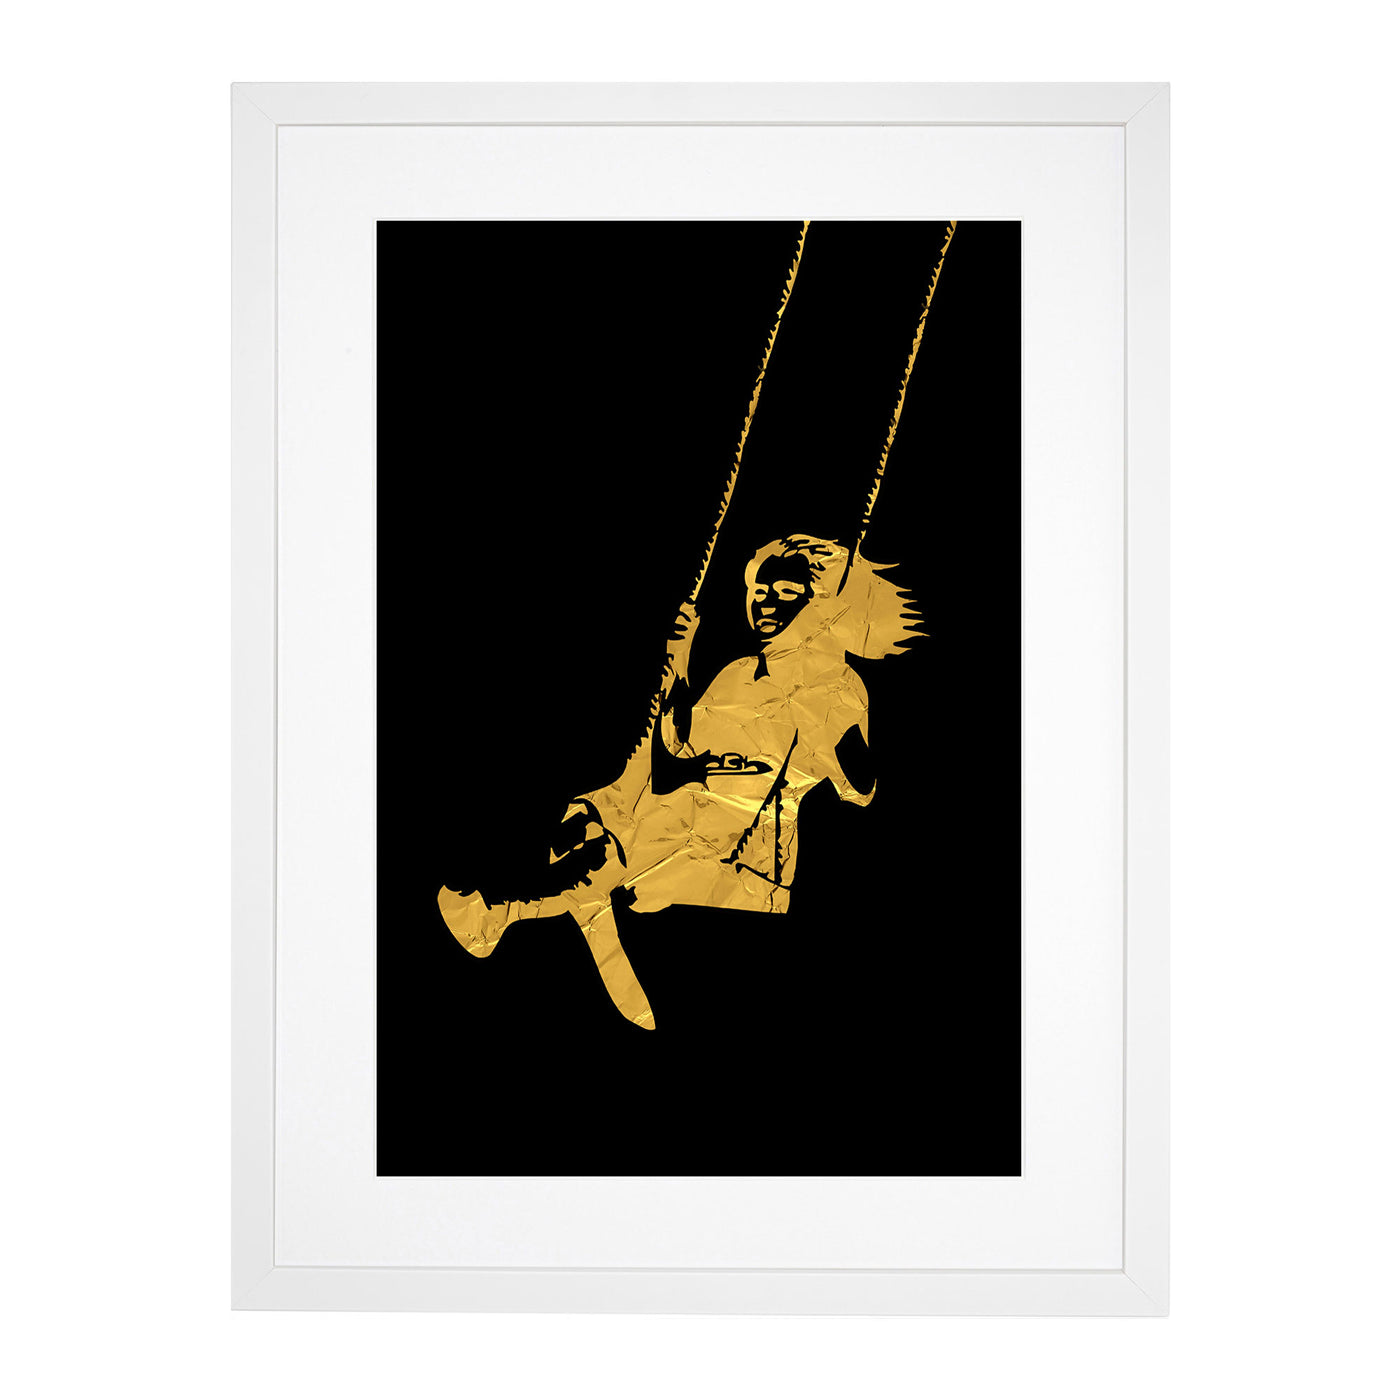 Banksy in Gold Girl on Swing